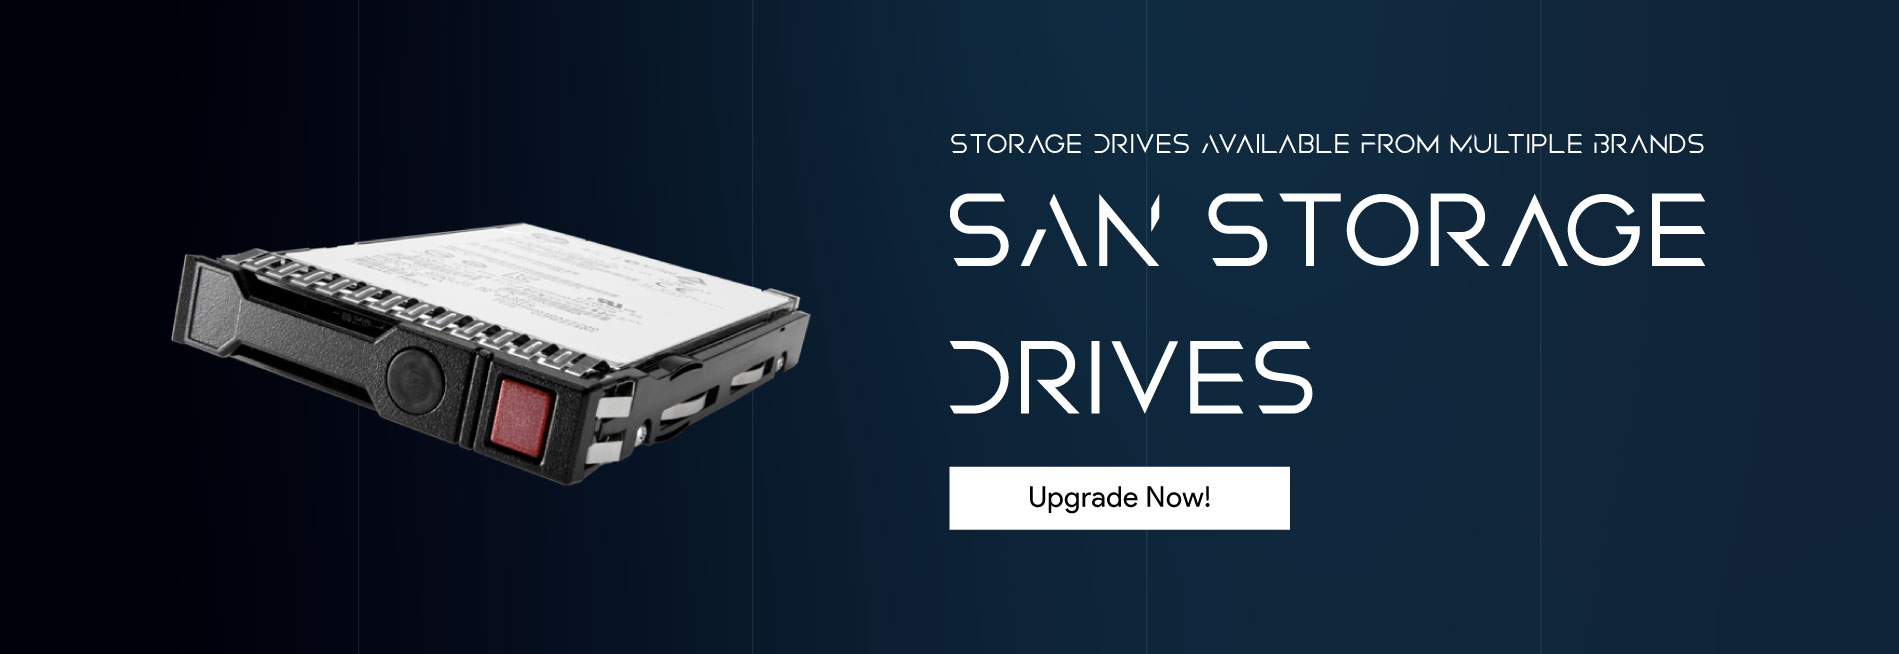 SAN-Storage-Drives